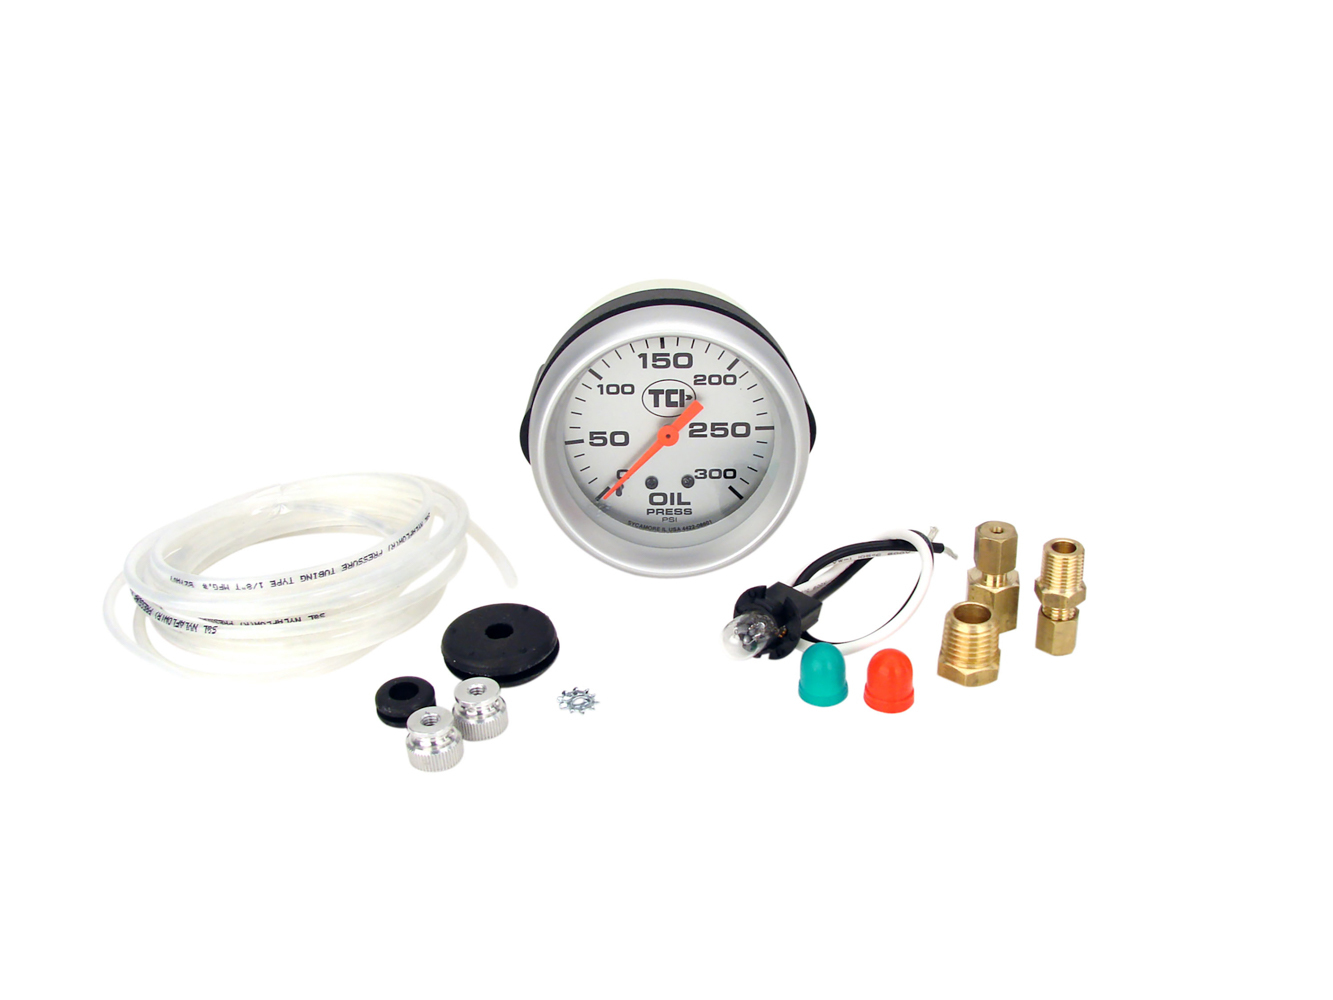 TCI 801101 Transmission Pressure Gauge, 0-300 psi Range, Mechanical, Analog, 2-5/8 in Diameter, Silver Face, Kit